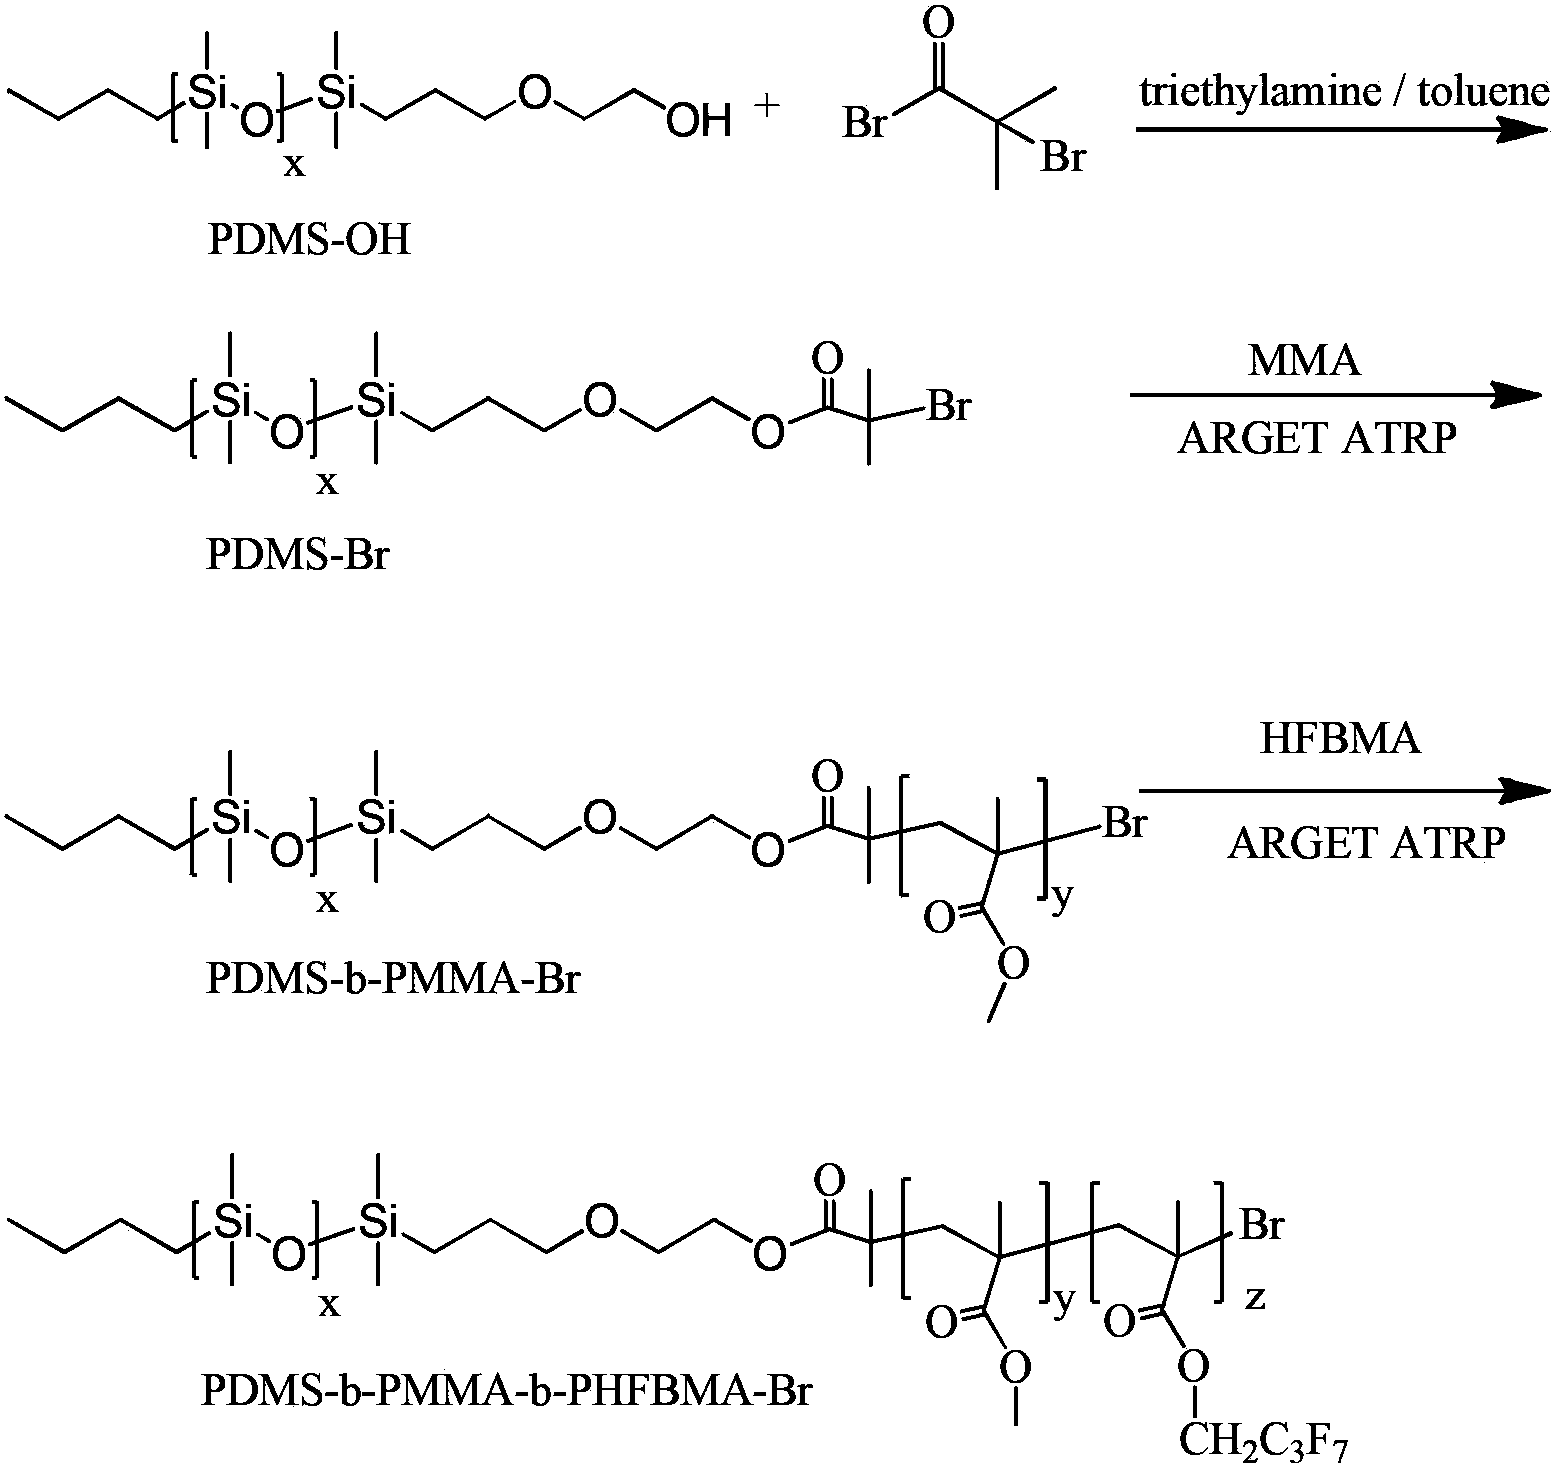 Fluorine-silicon tri-block copolymer and preparation method thereof